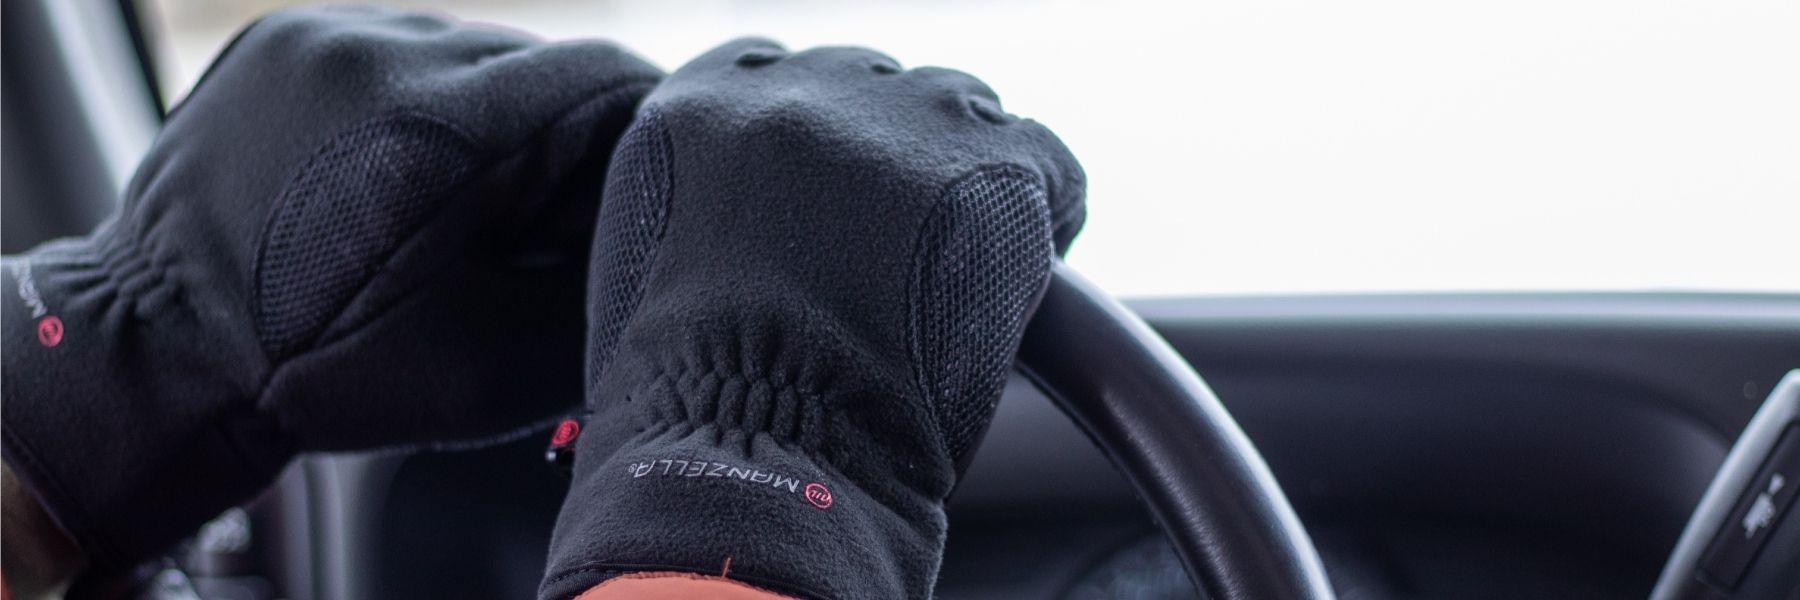 TouchTip Gloves